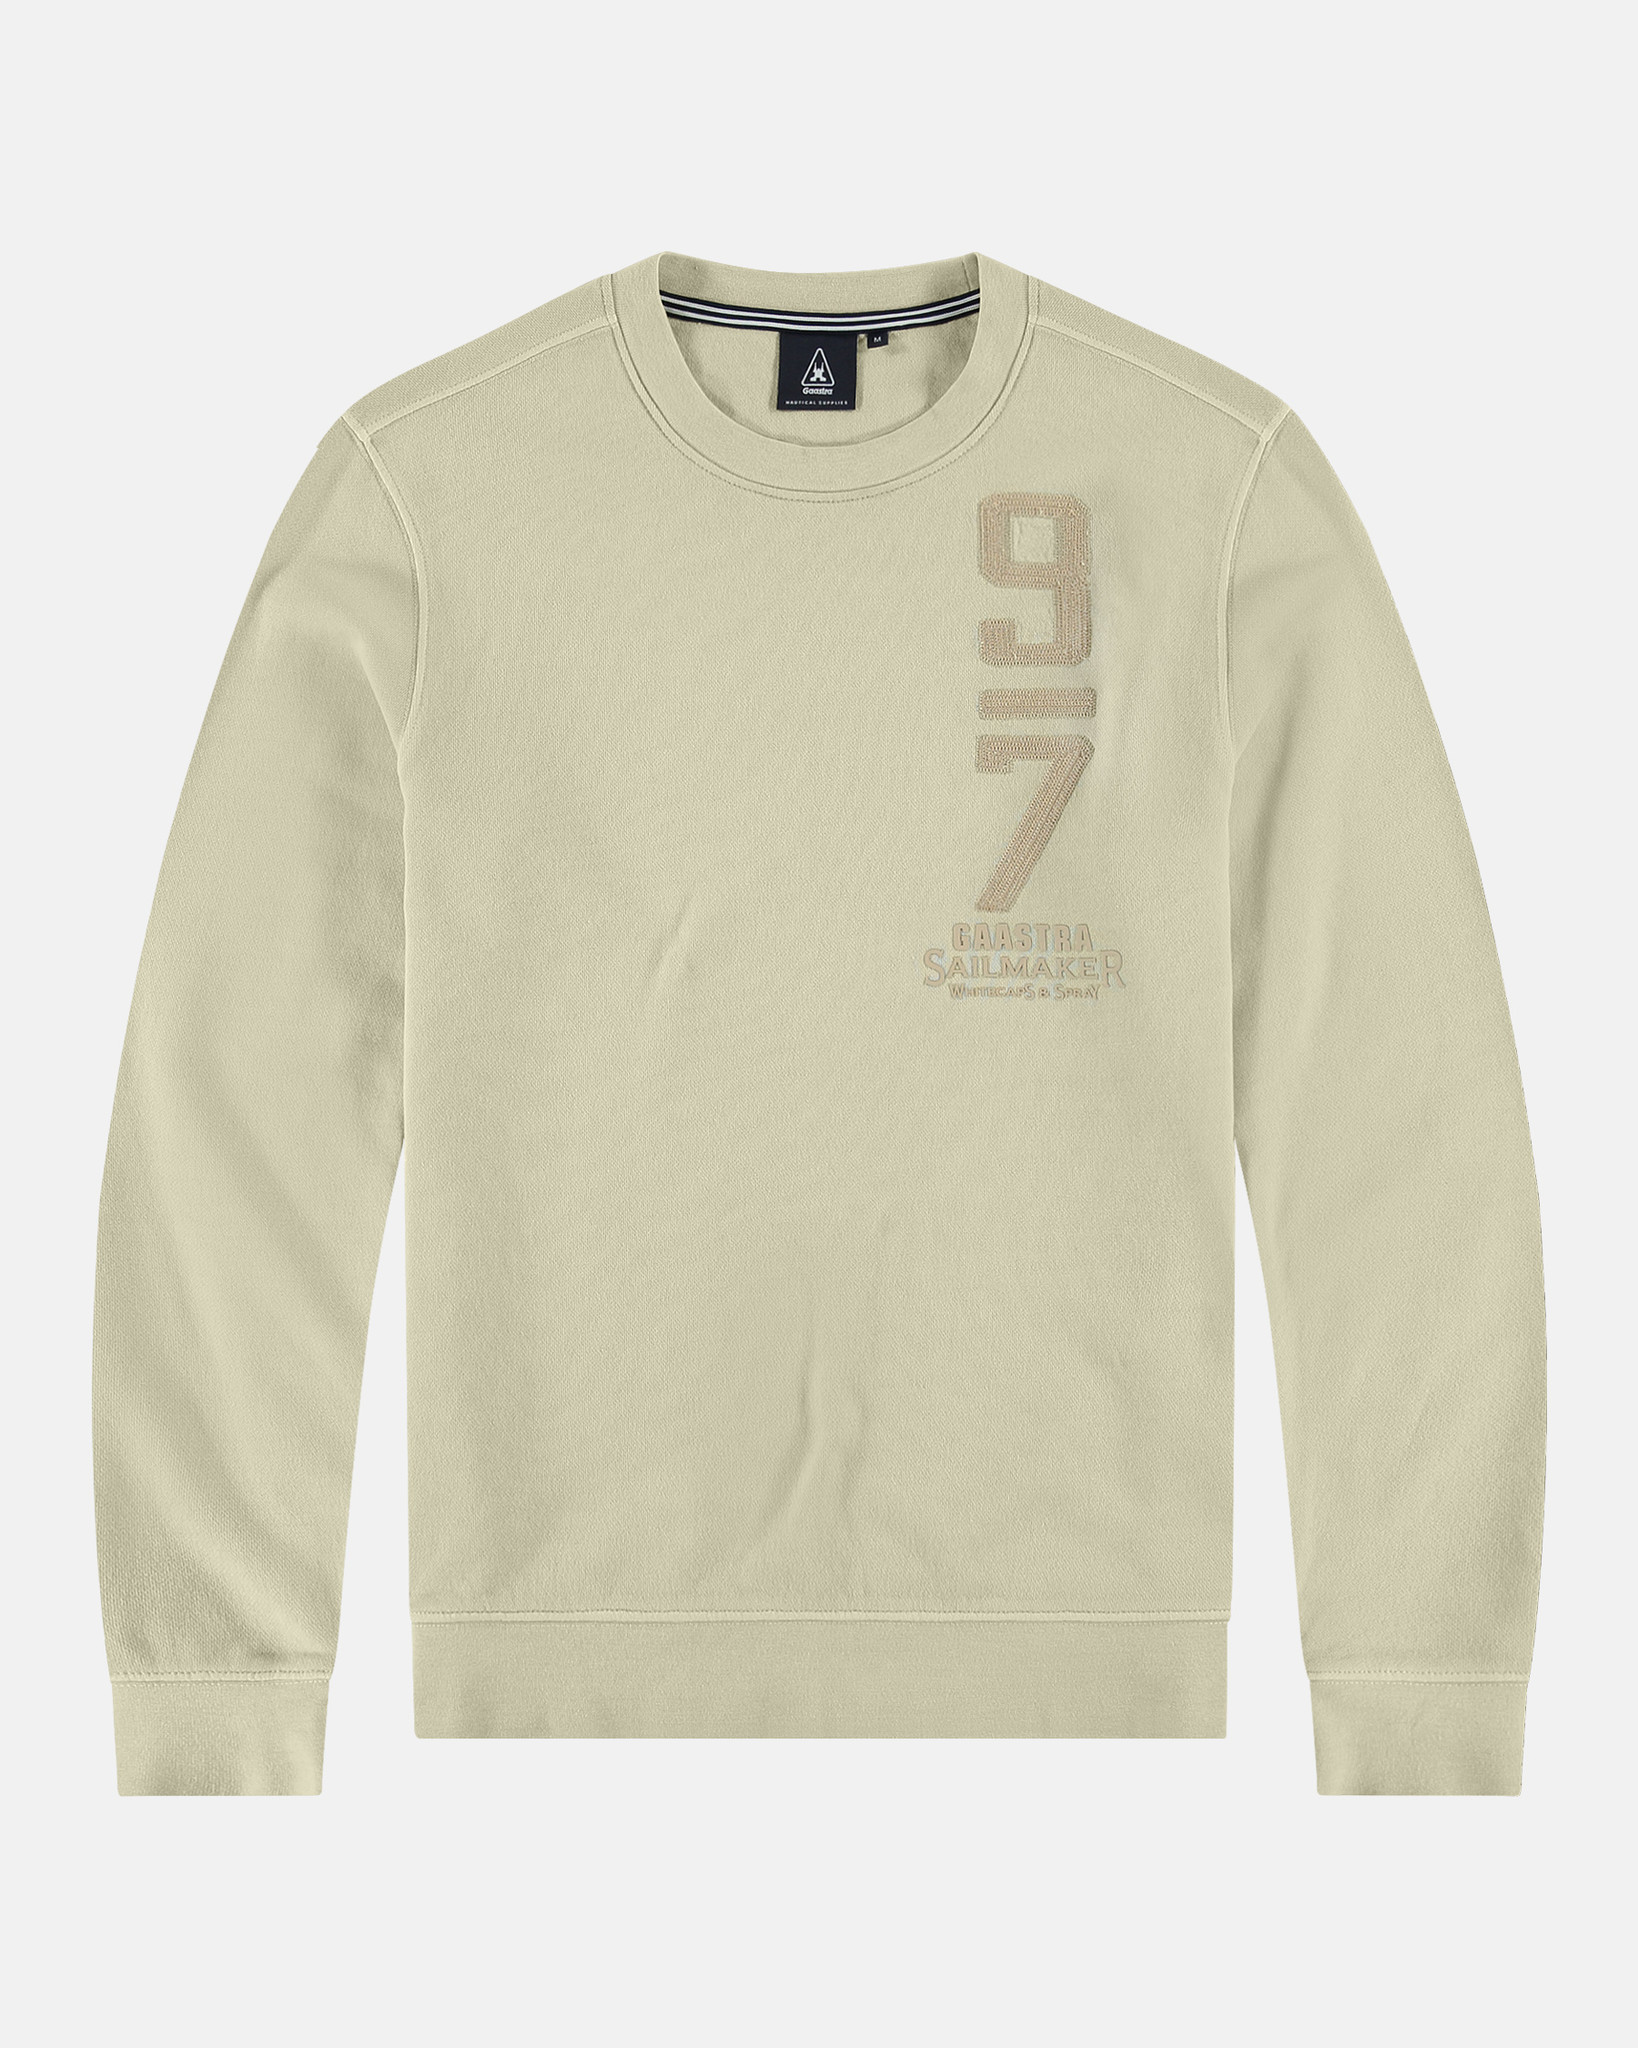 The cotton Moor Rib sweater